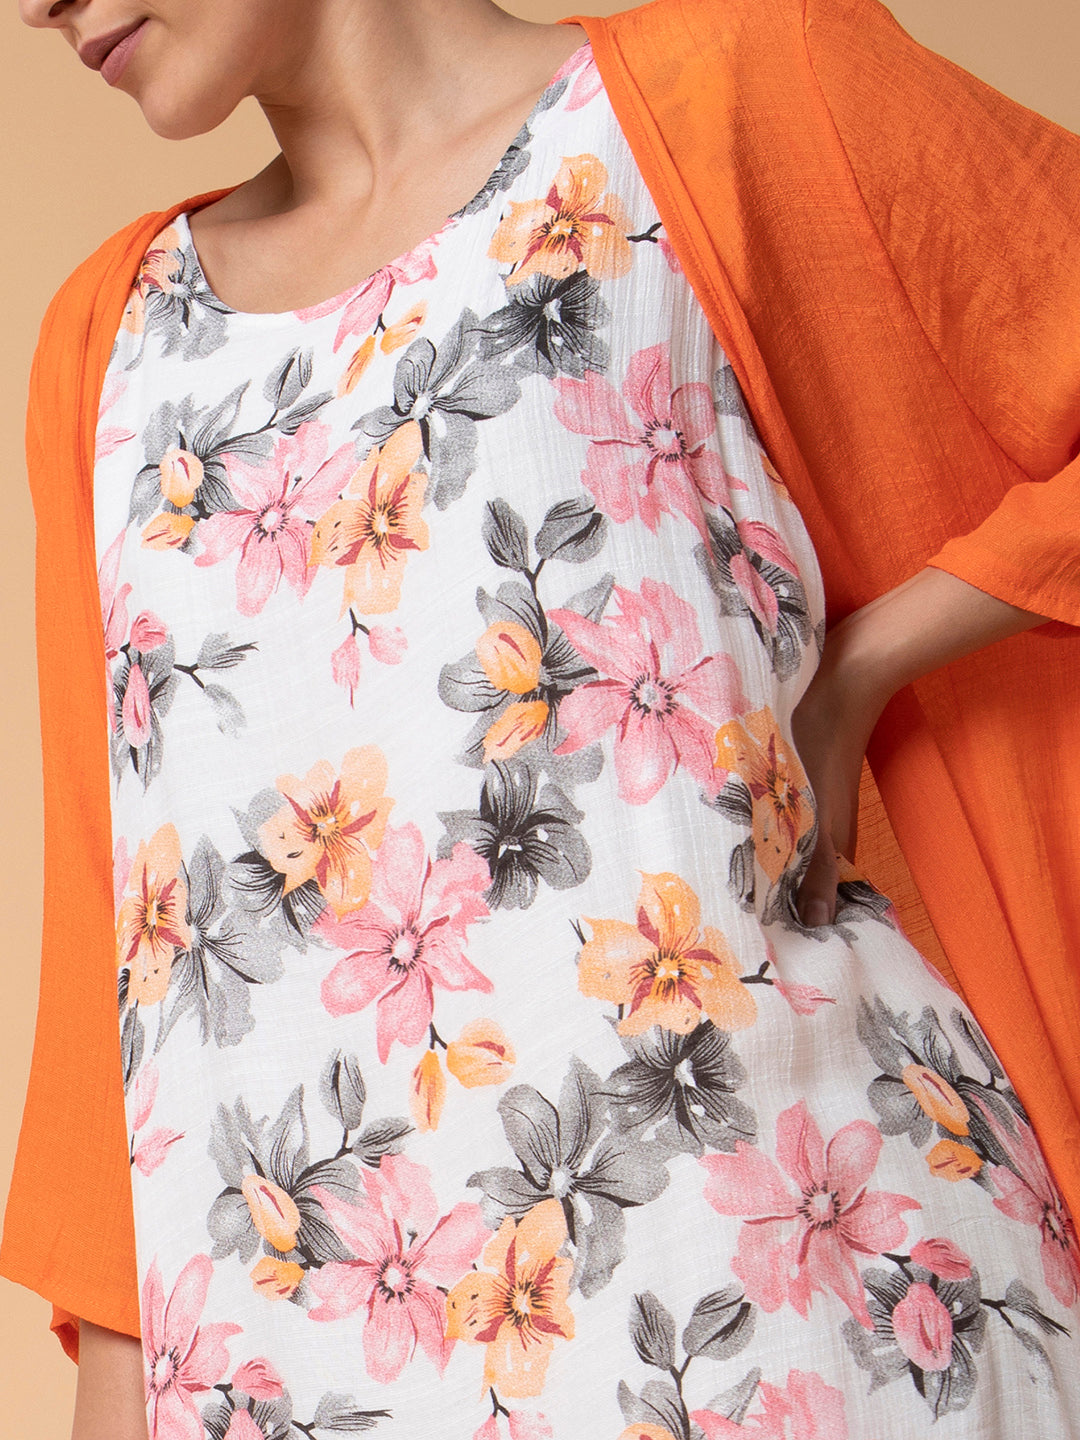 Women Floral Orange Midi A-Line Dress with shrug